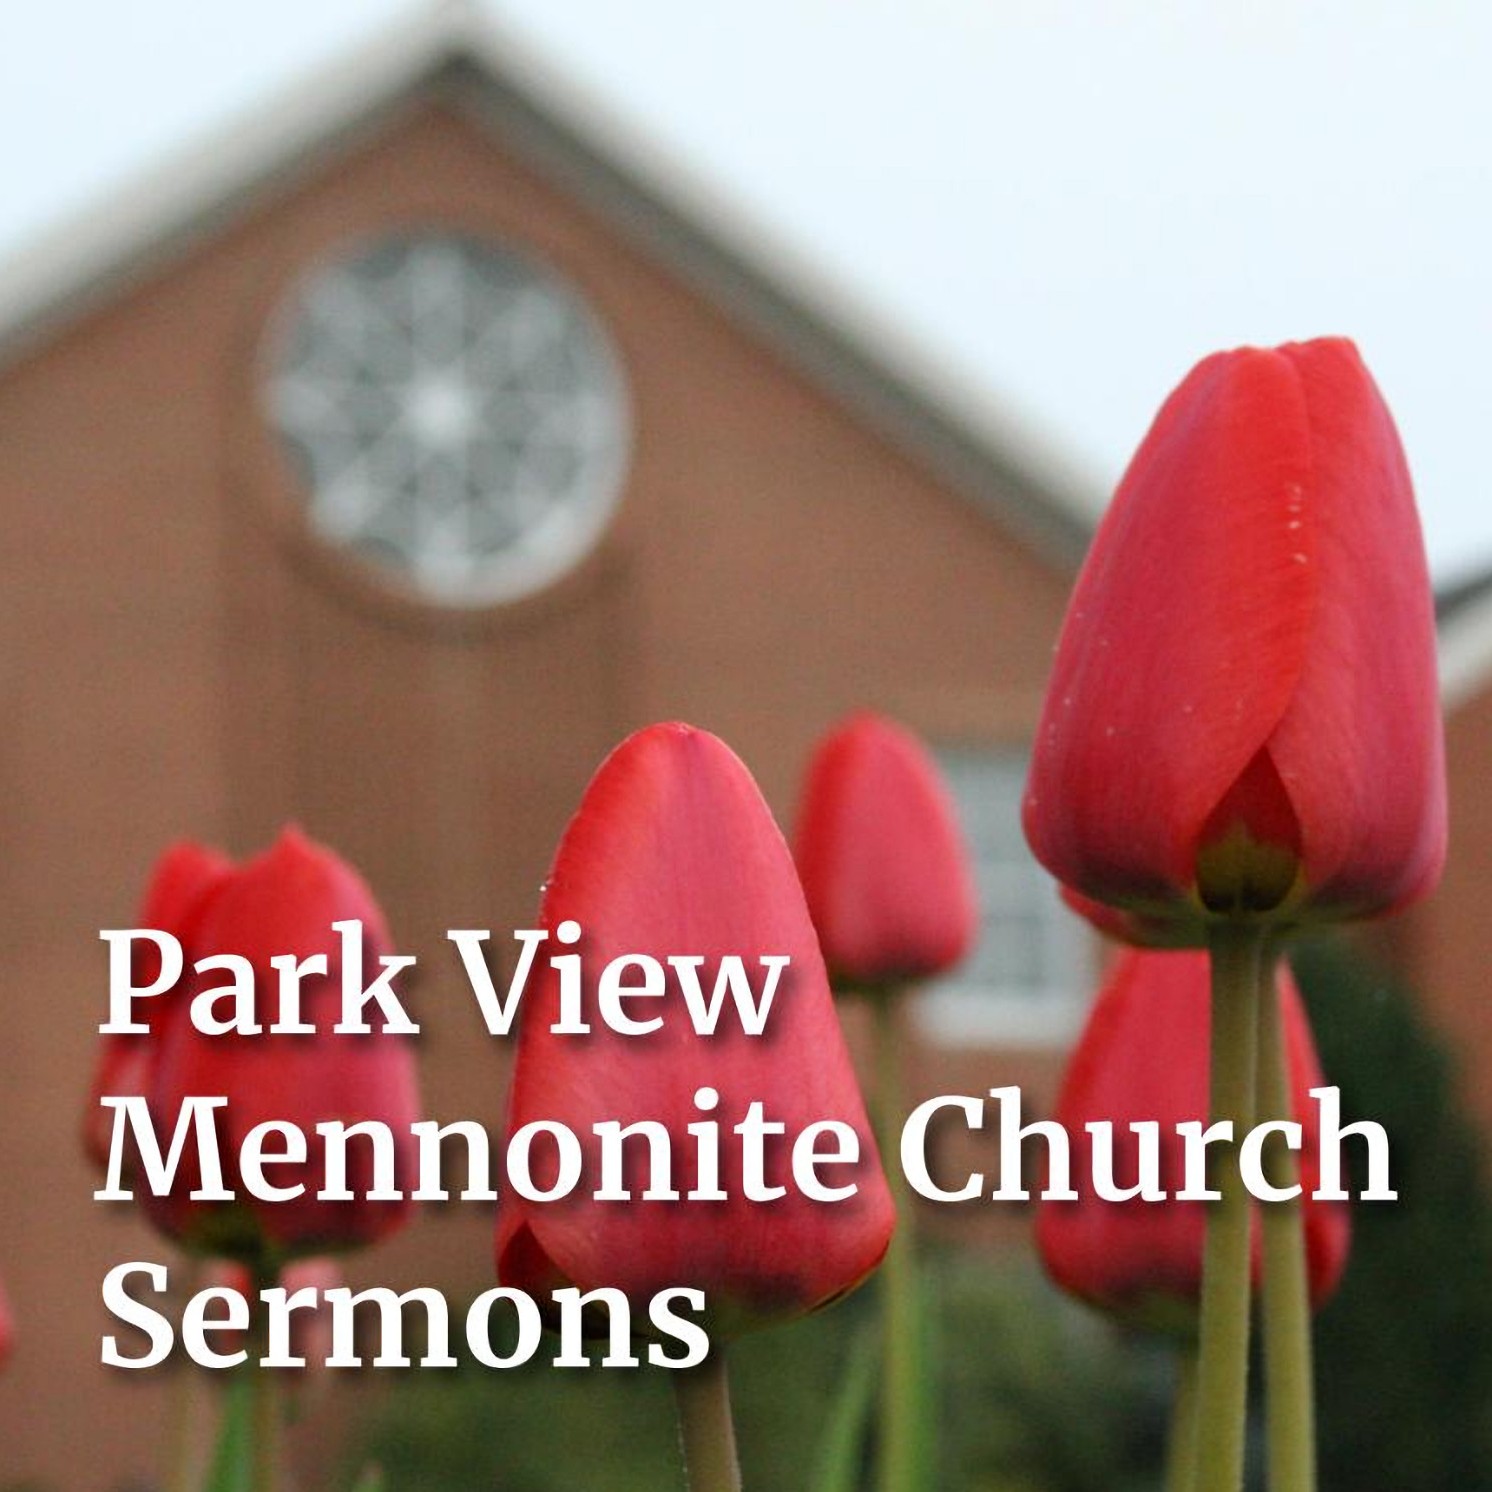 Park View Mennonite Church sermons